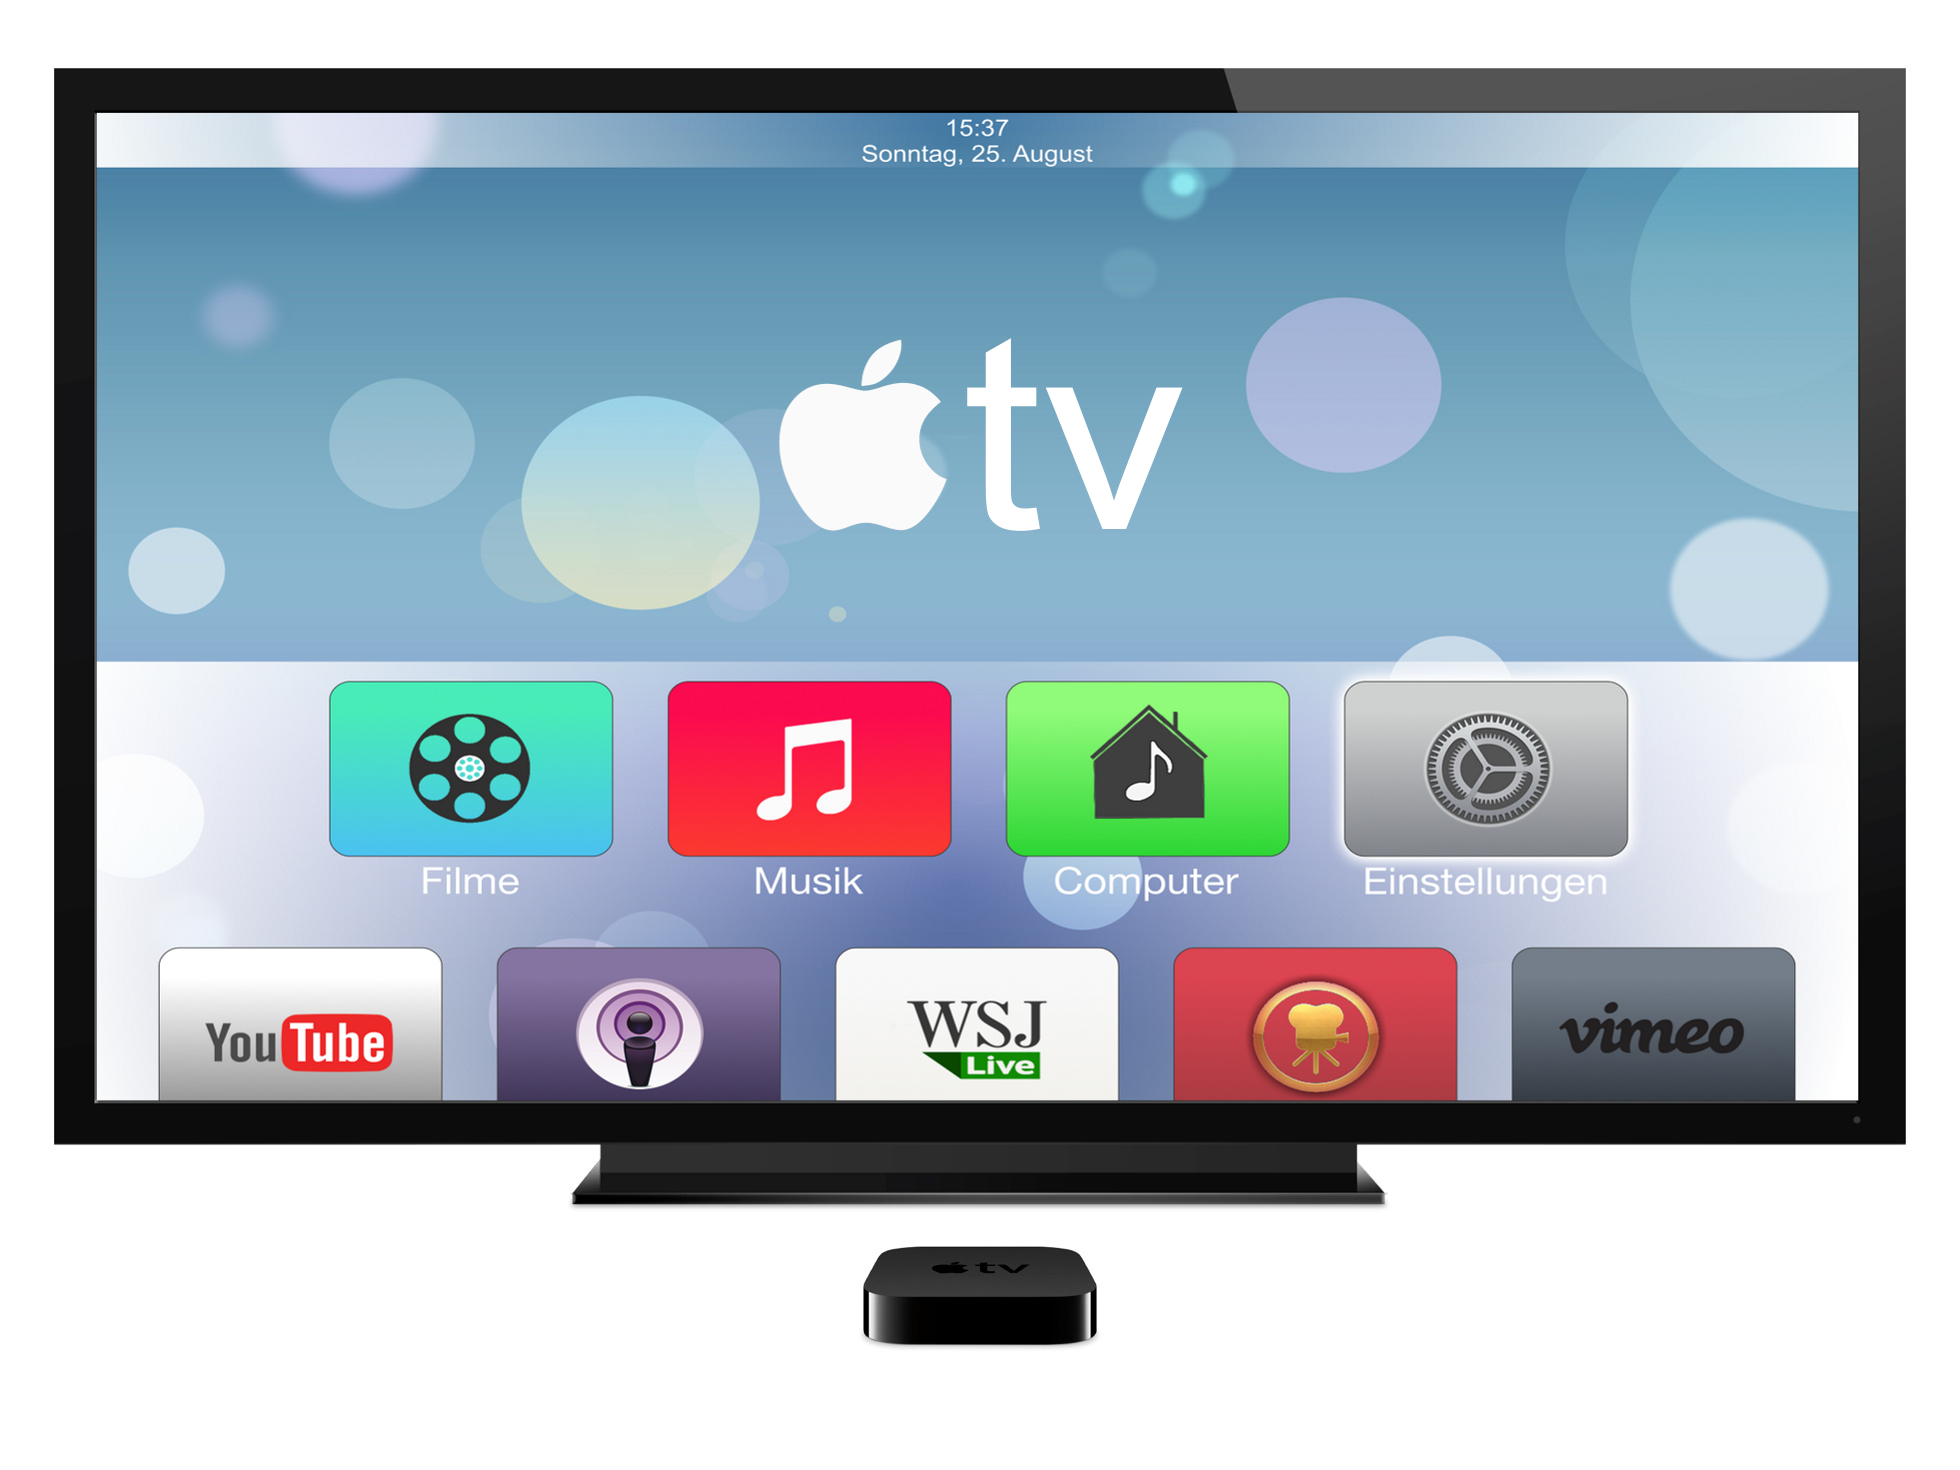 Картинки телевизоров айфон. Apple TV a1469. Эпл ТВ. Телевизор Эппл. Apple TV экран.